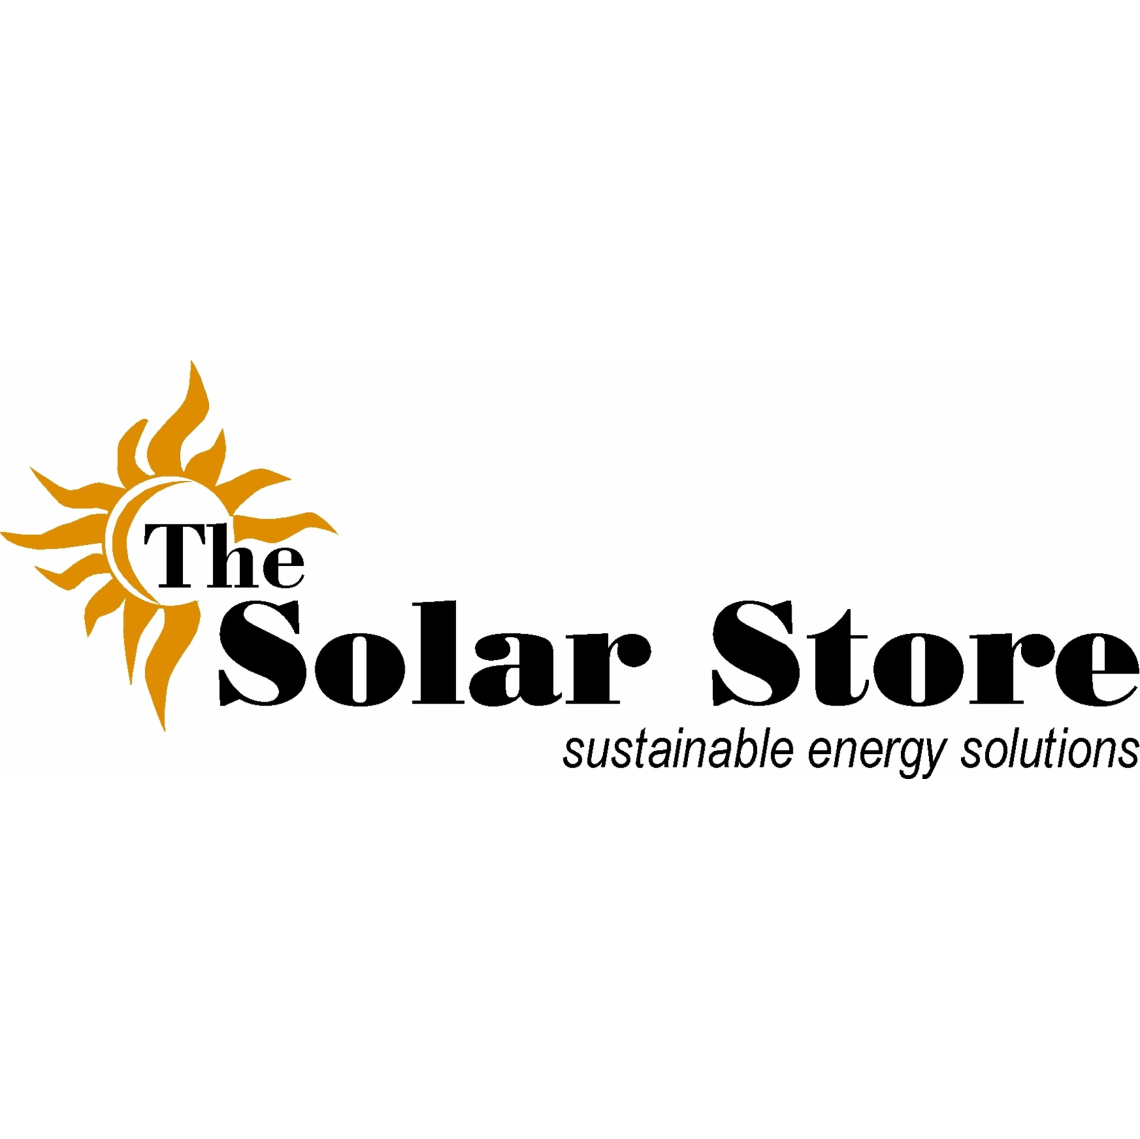 square solar store logo